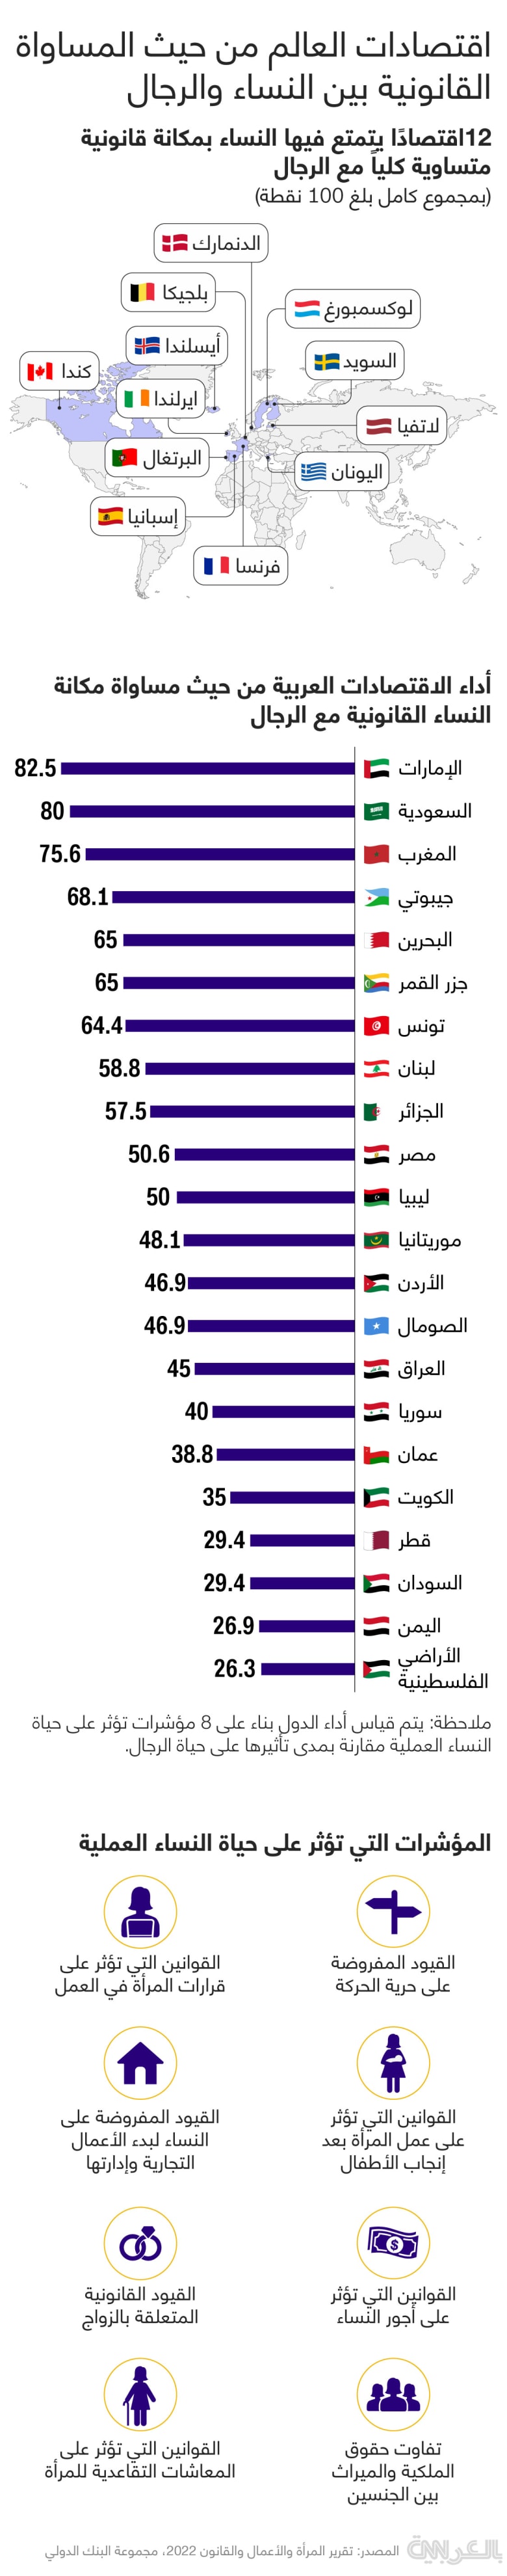 arab-top-economies-in-women-equality-22